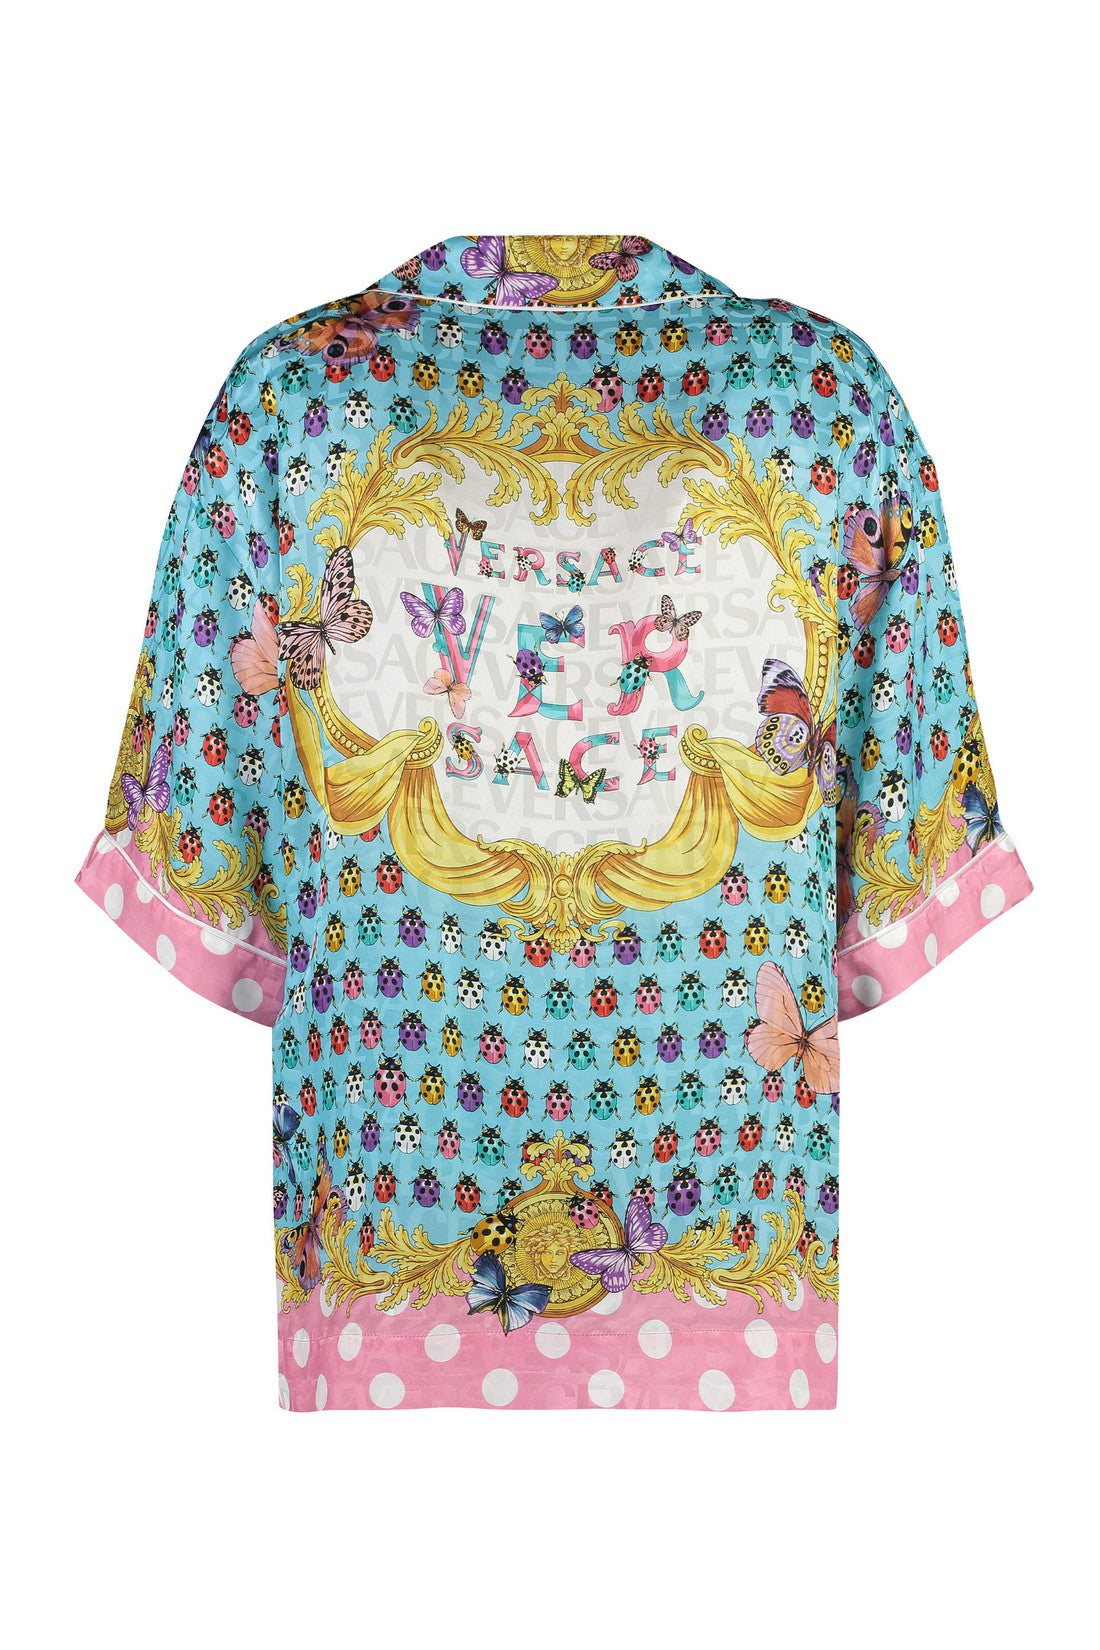 Versace-OUTLET-SALE-Silk blend shirt-ARCHIVIST